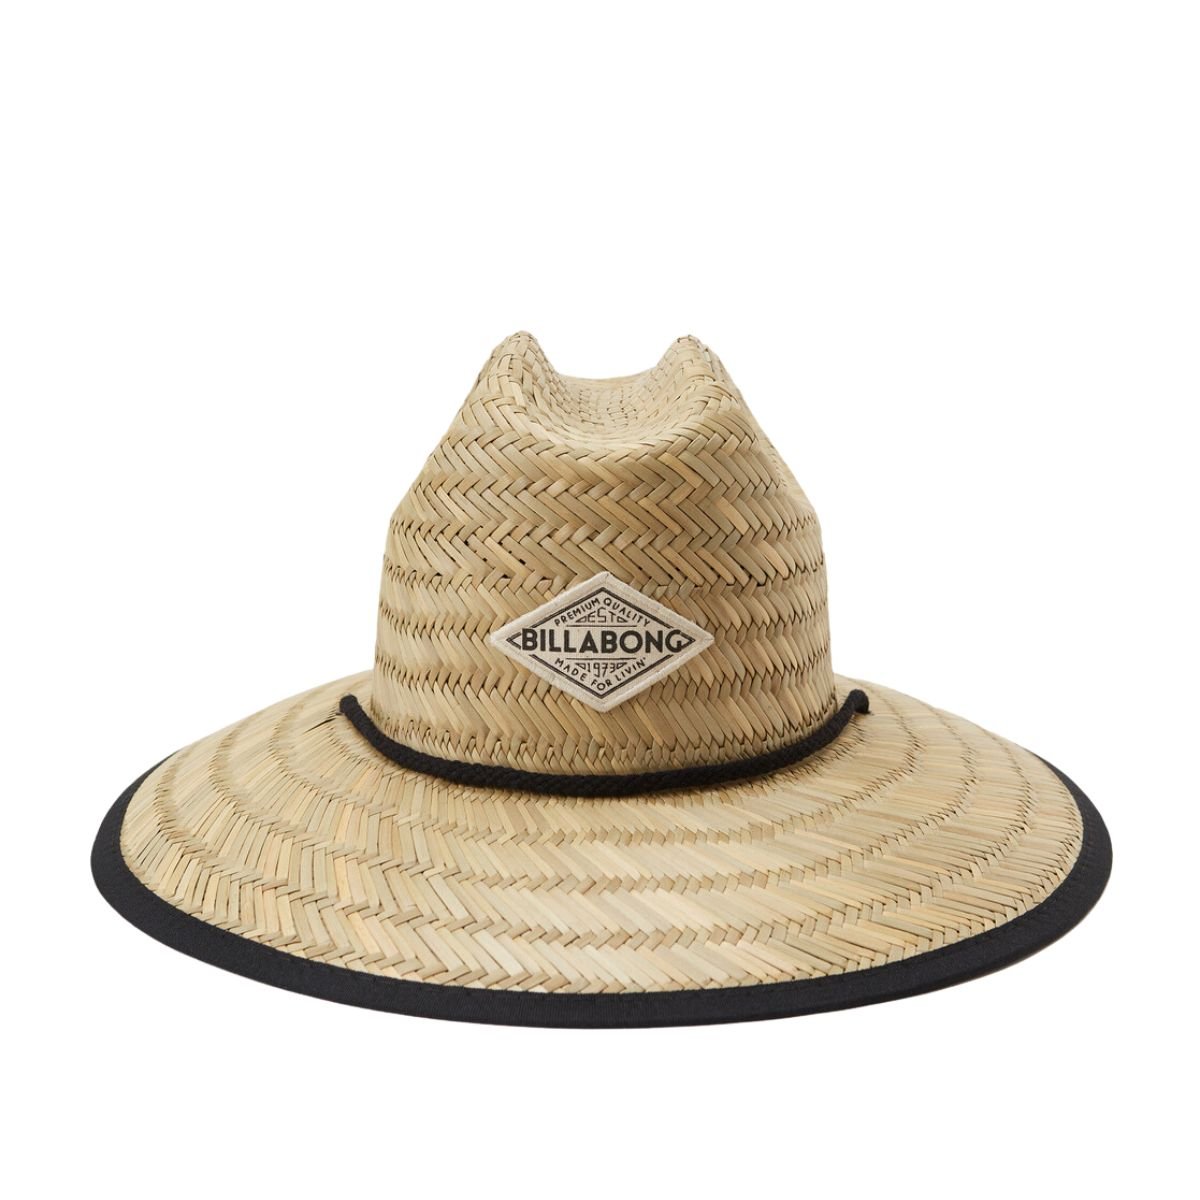 Billabong Tipton Straw Hat in Antique Black - BoardCo